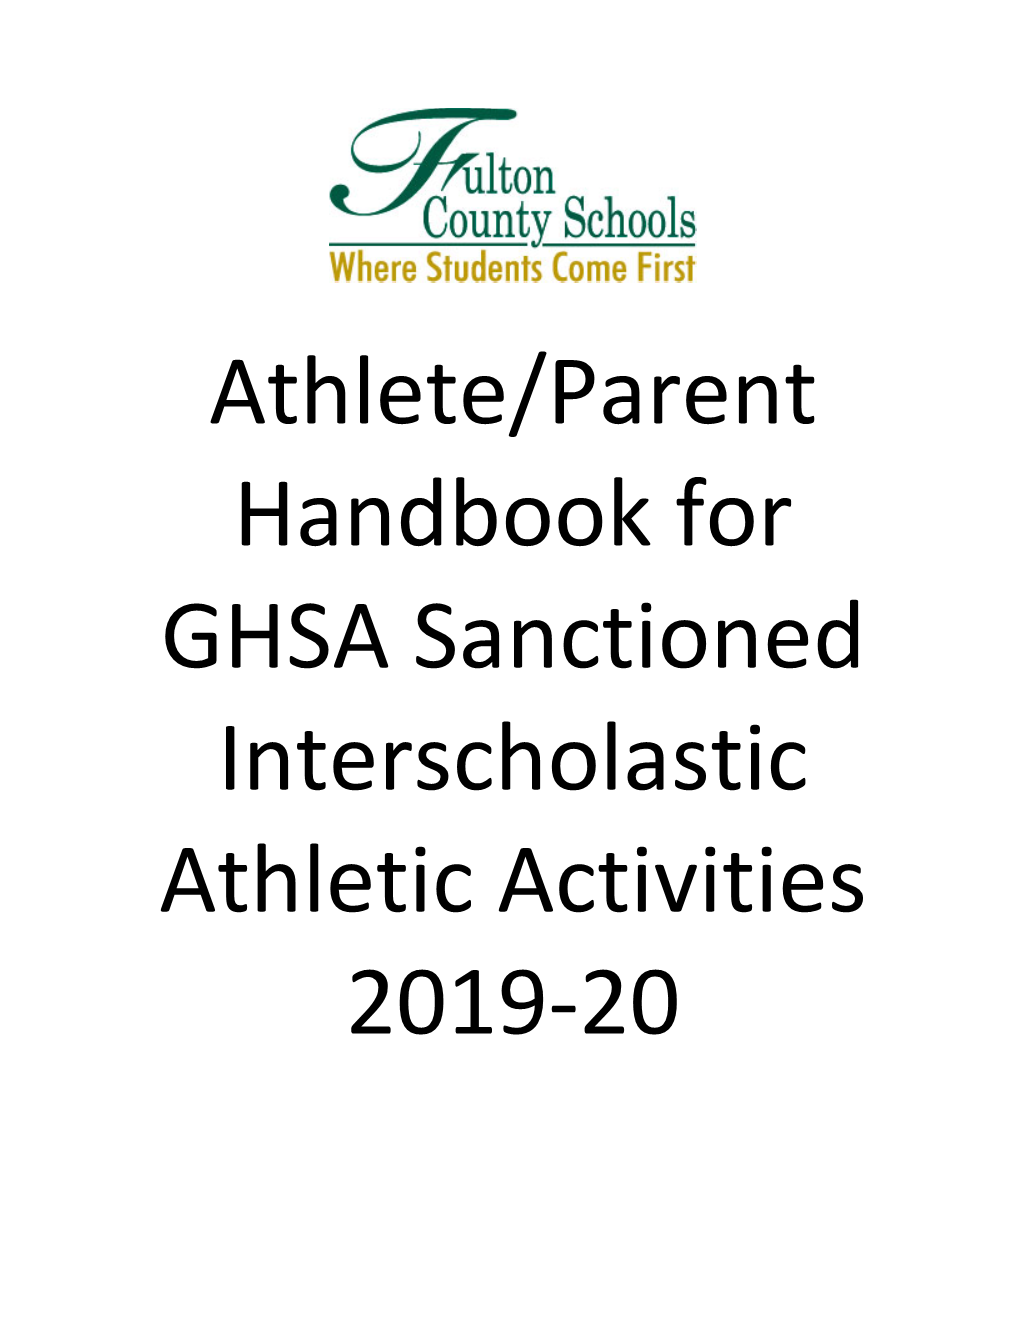 Athlete/Parent Handbook for GHSA Sanctioned Interscholastic Athletic Activities 2019-20